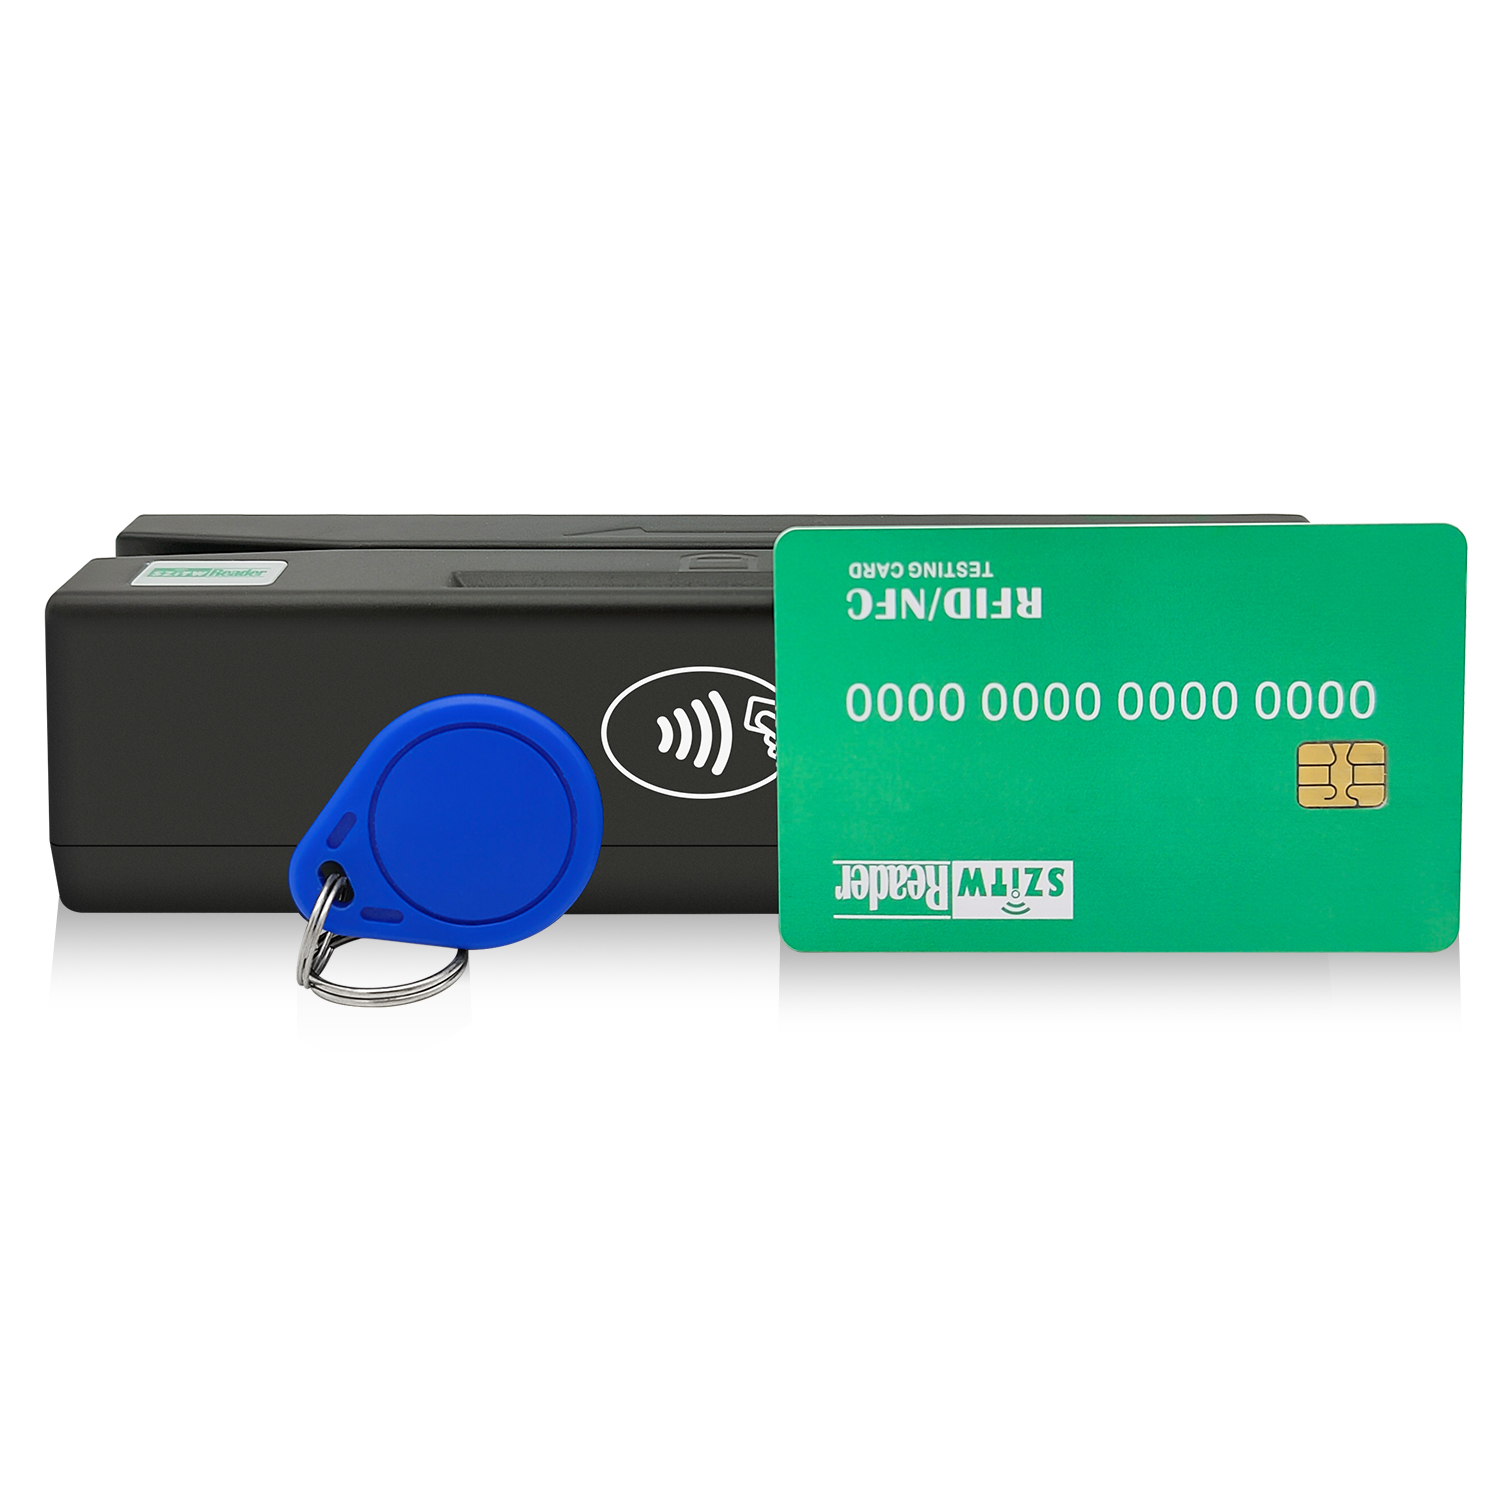 4 in 1 SZTW160 USB Multifuncational EMV Credit Card Reader Writer